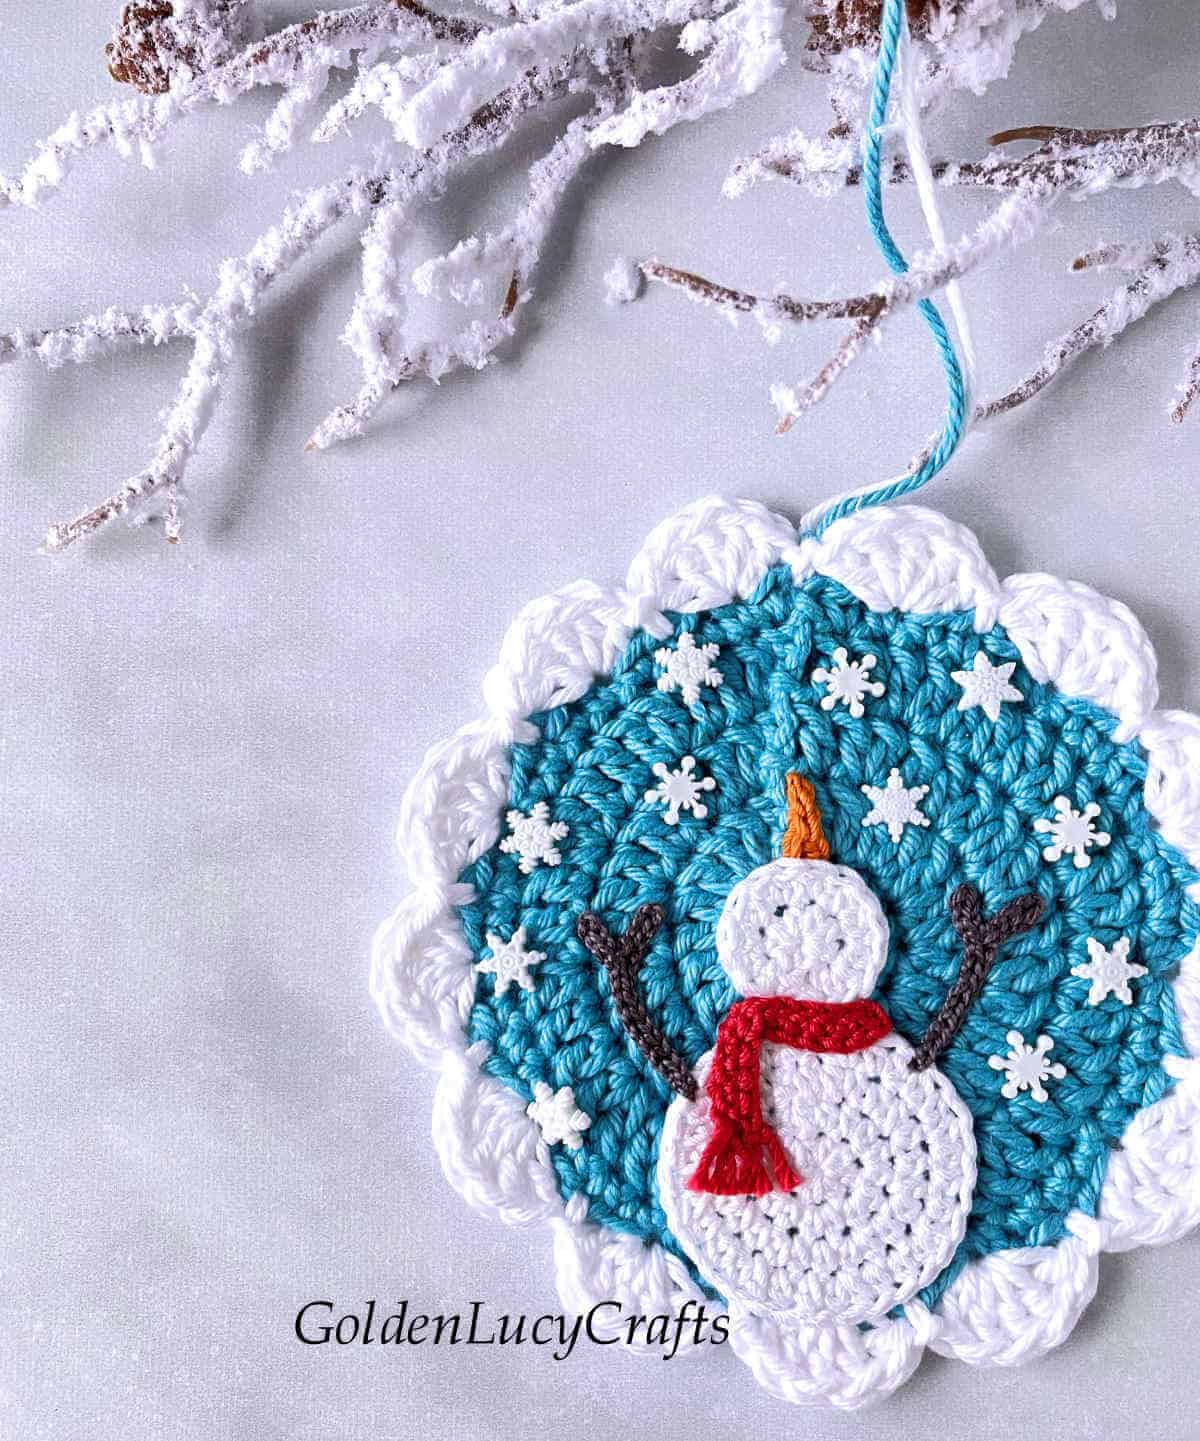 Crochet winter ornament close up image.